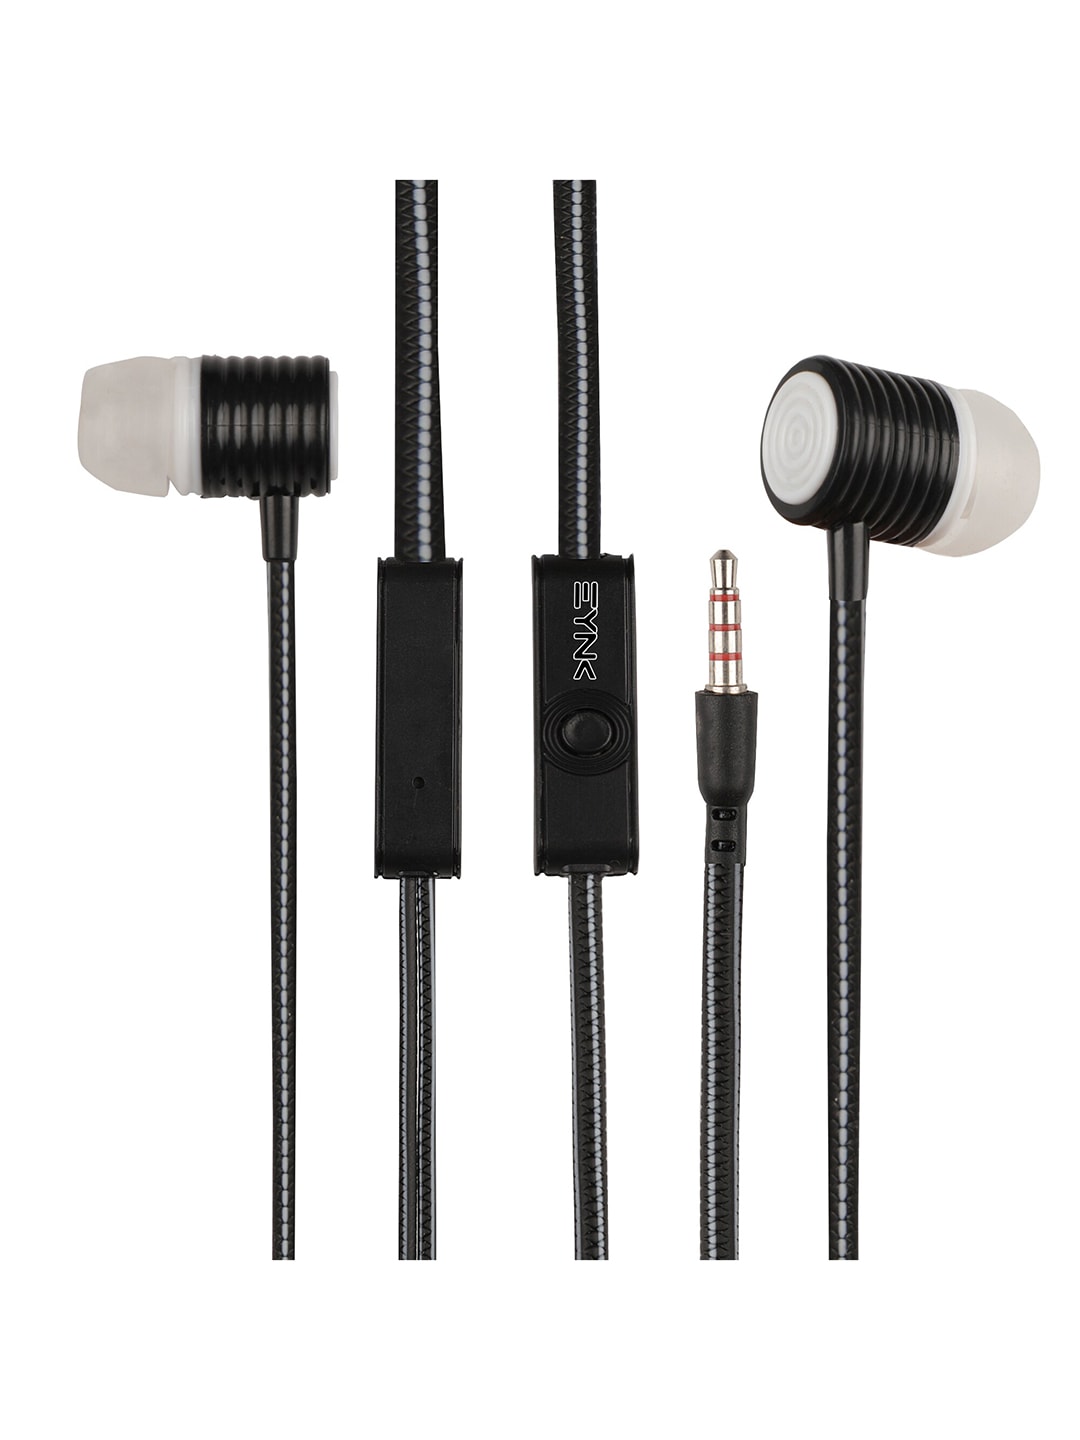 EYNK Black & White Solid In-Ear Wired Earphones Price in India